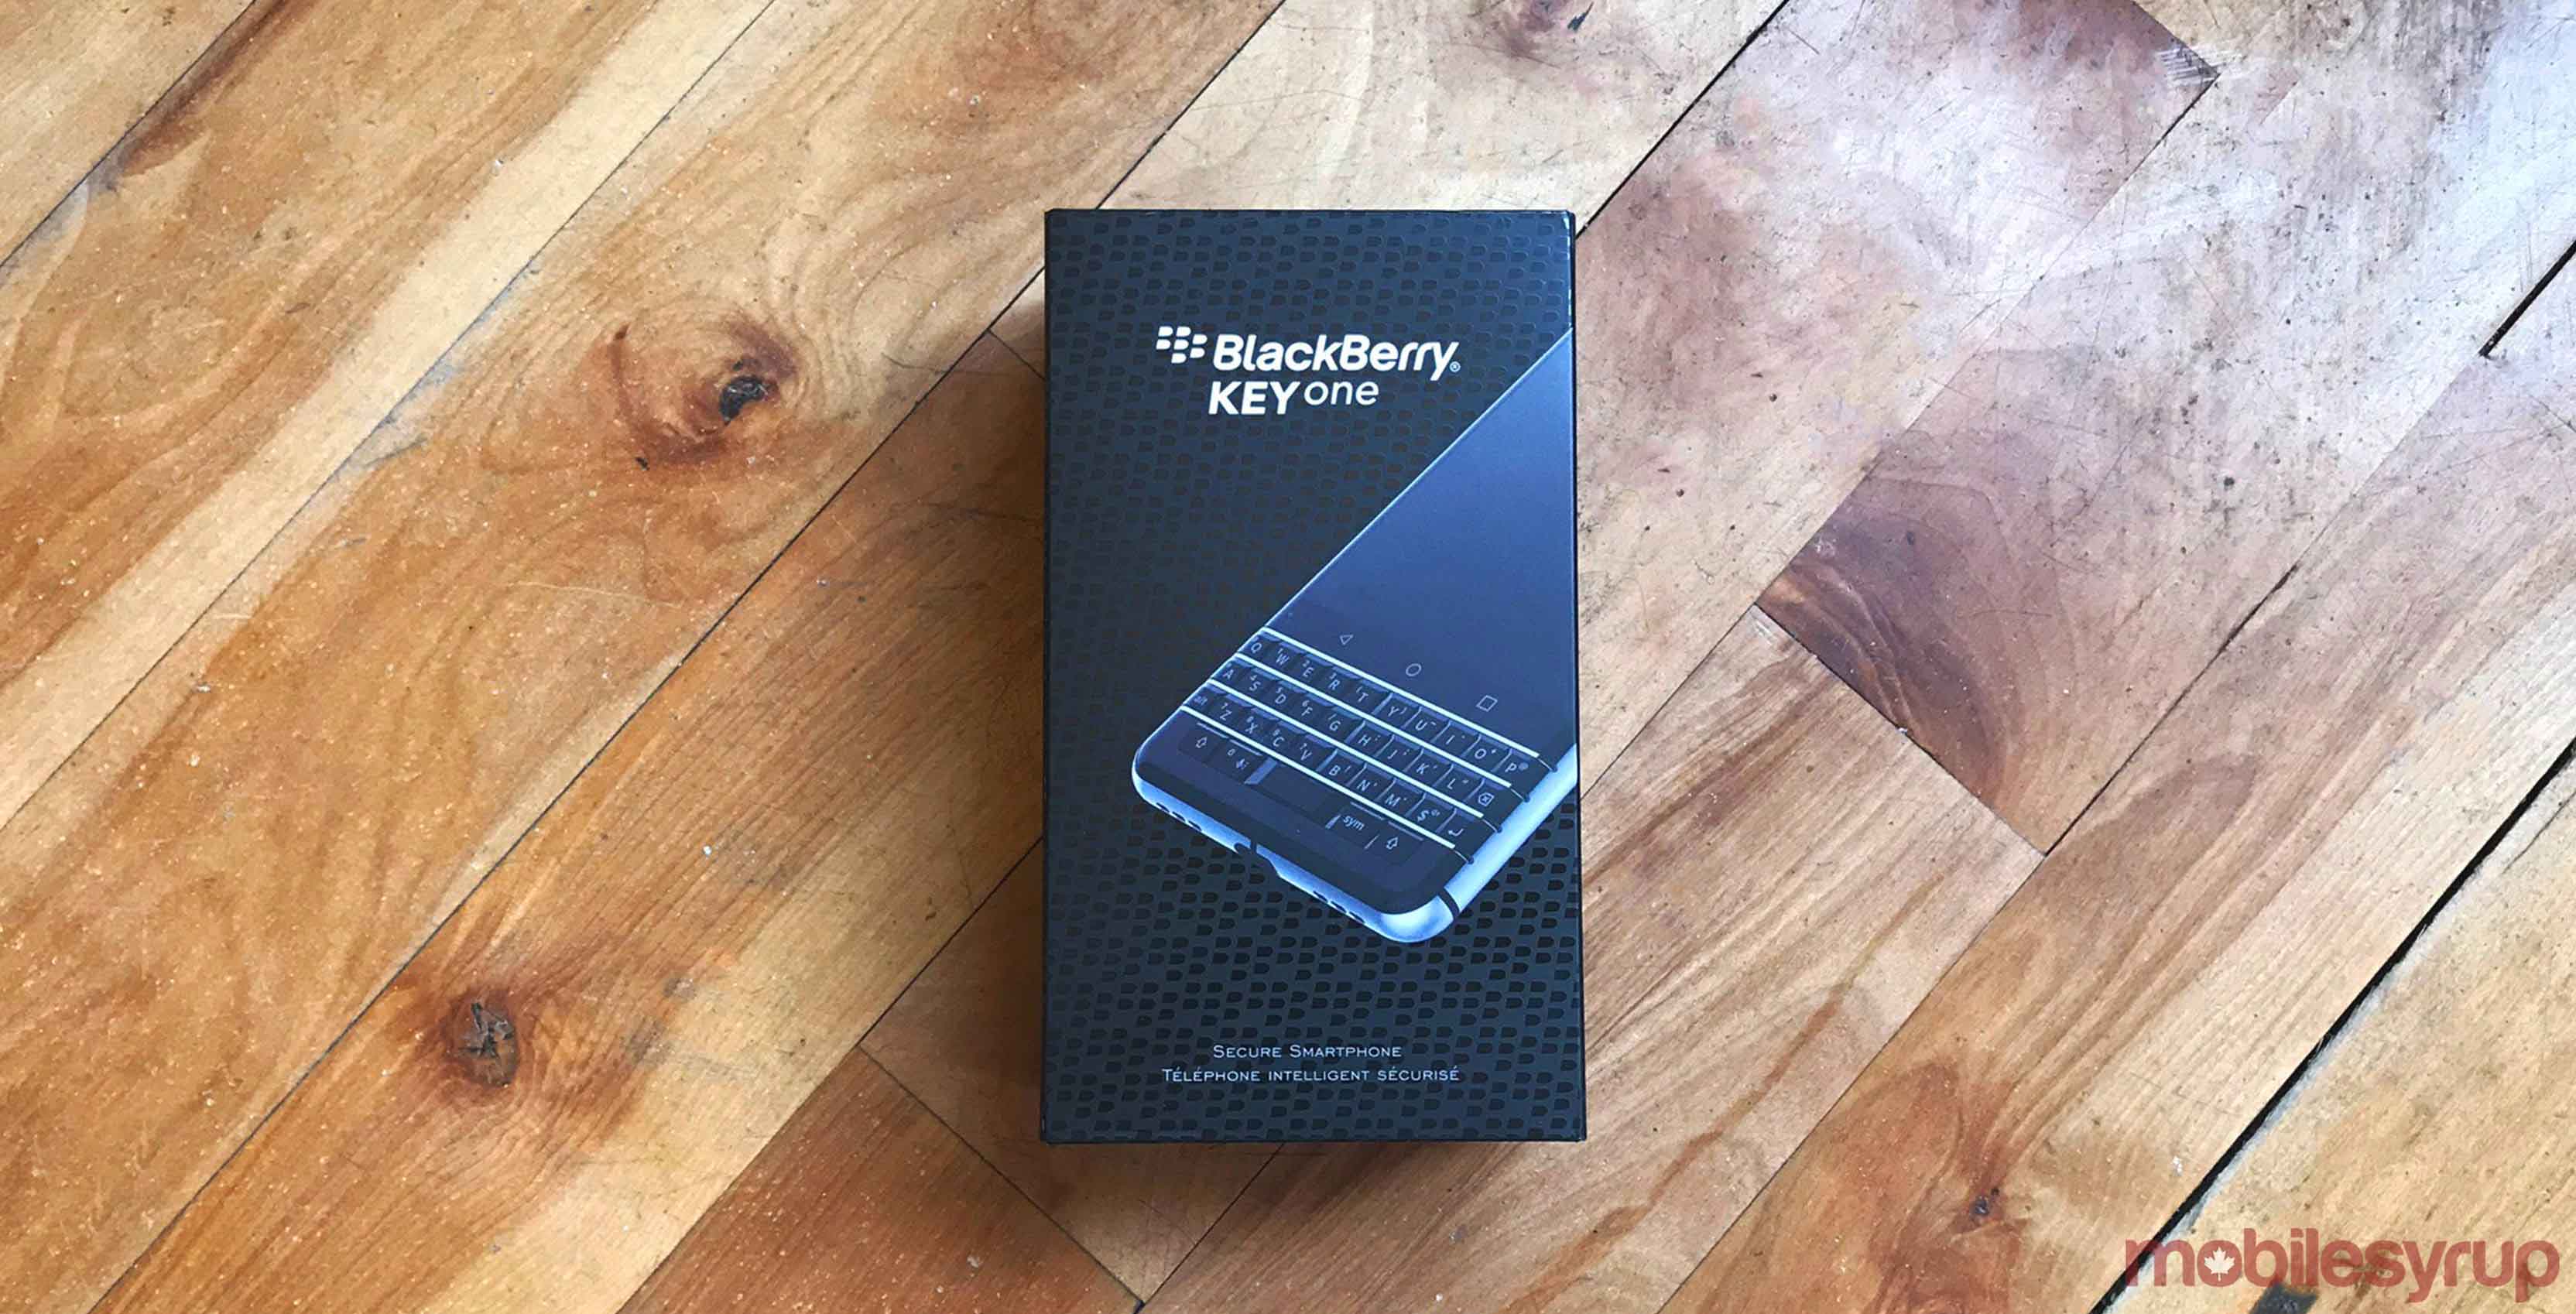 blackberry keyone box laying on hardwood floor